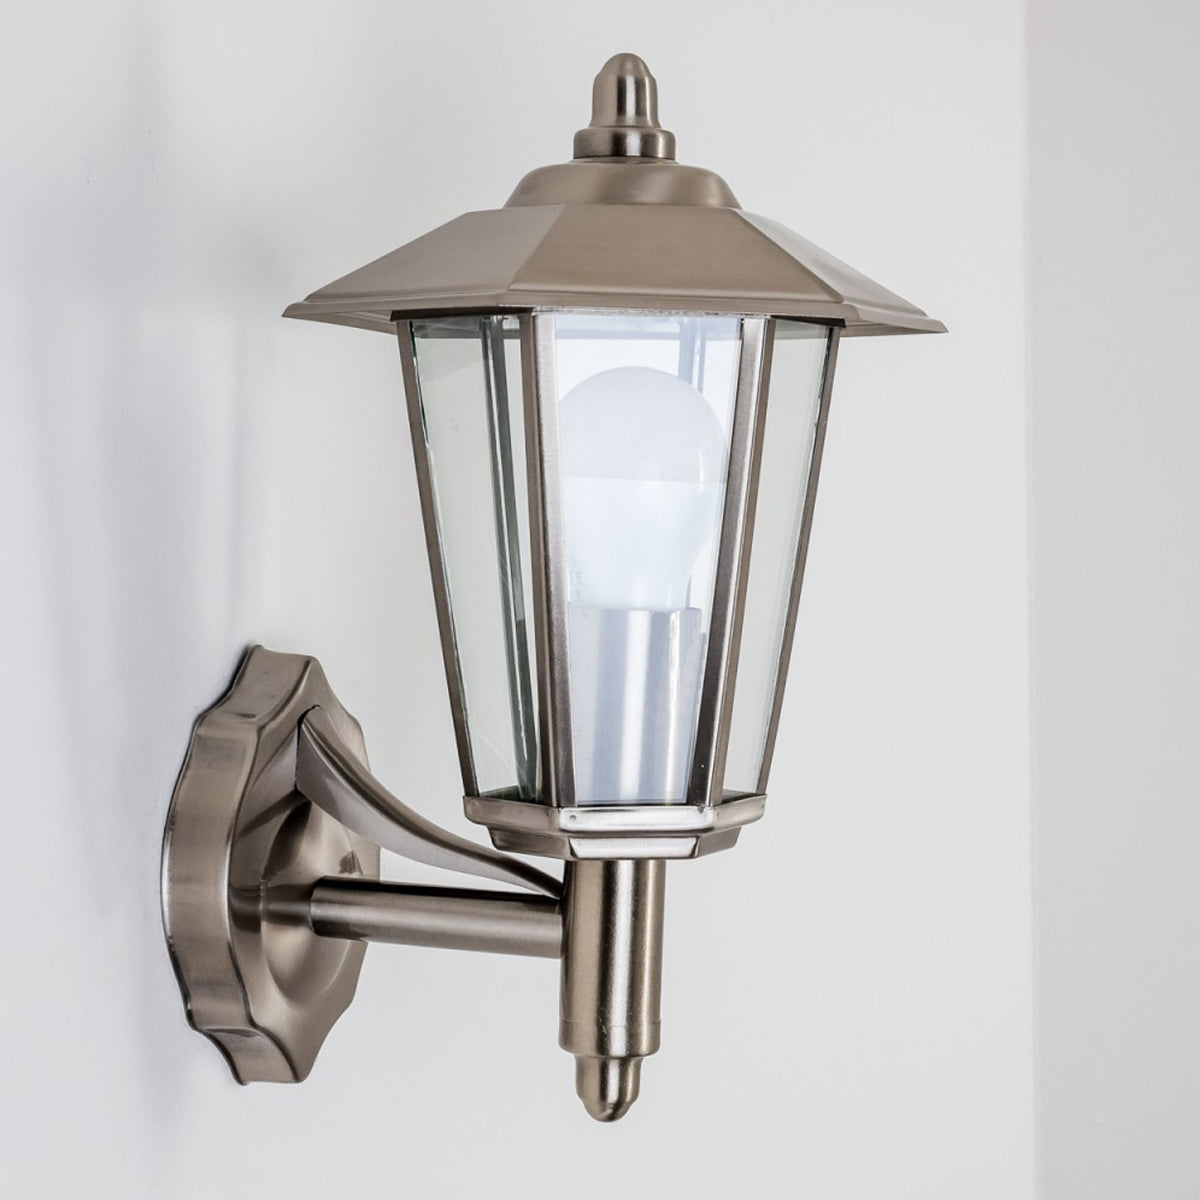 CGC KENDRA Stainless Steel Vintage Style Lantern Light